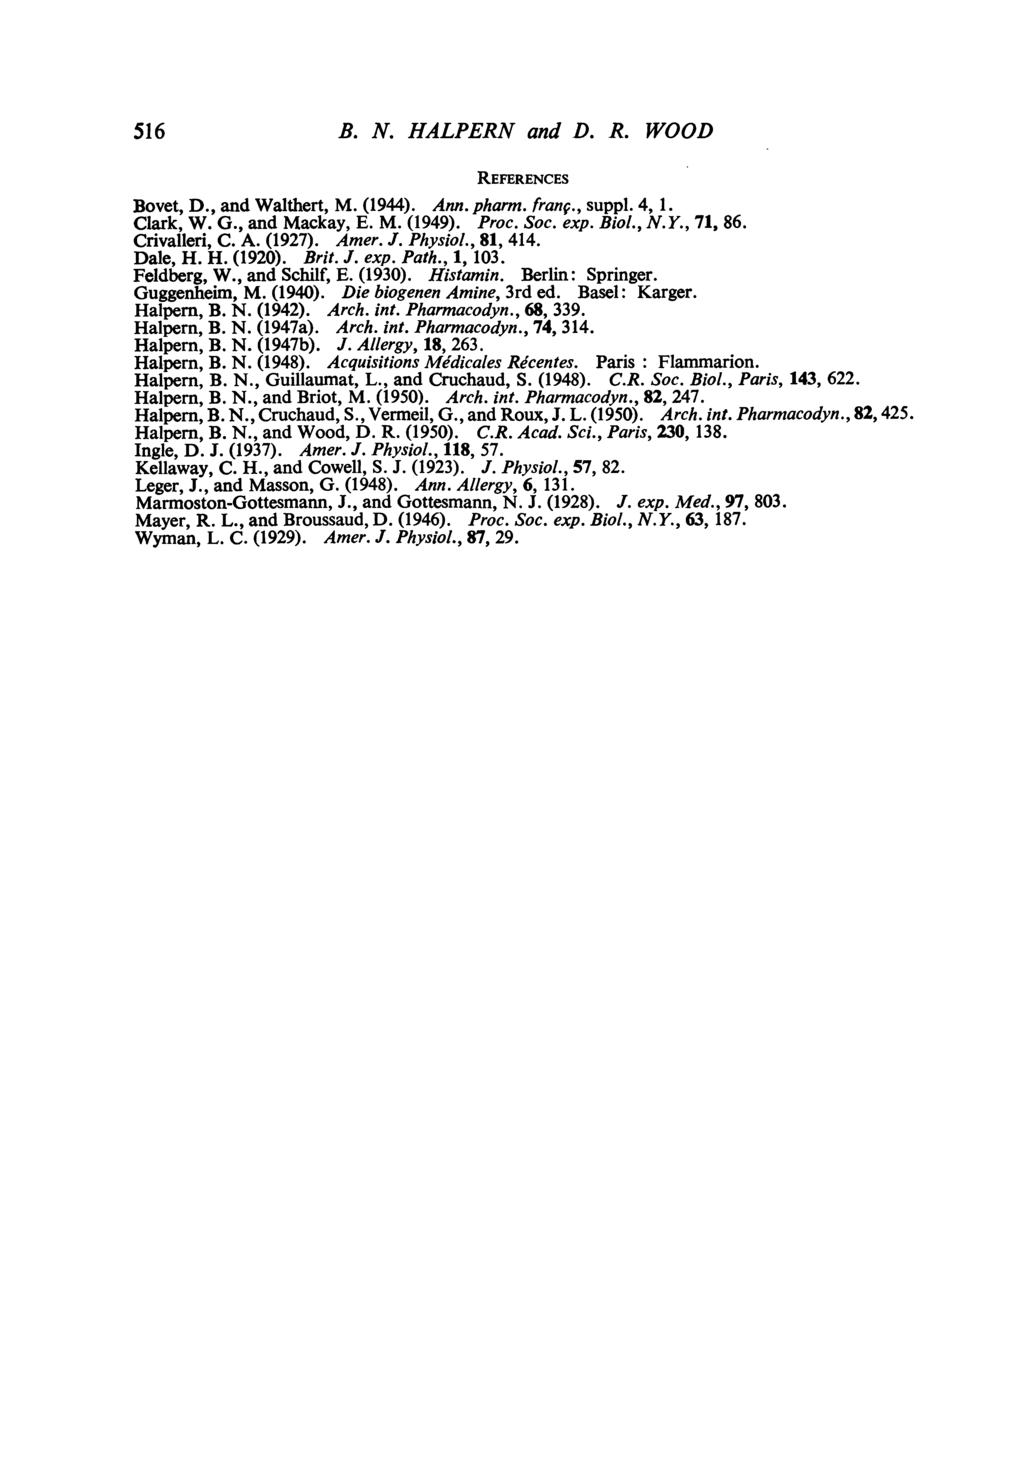 516 B. N. HALPERN and D. R. WOOD REFERENCES Bovet, D., and Walthert, M. (1944). Ann. pharm. Franz., suppl. 4, 1. Clark, W. G., and Mackay, E. M. (1949). Proc. Soc. exp. Biol., N.Y., 71, 86.